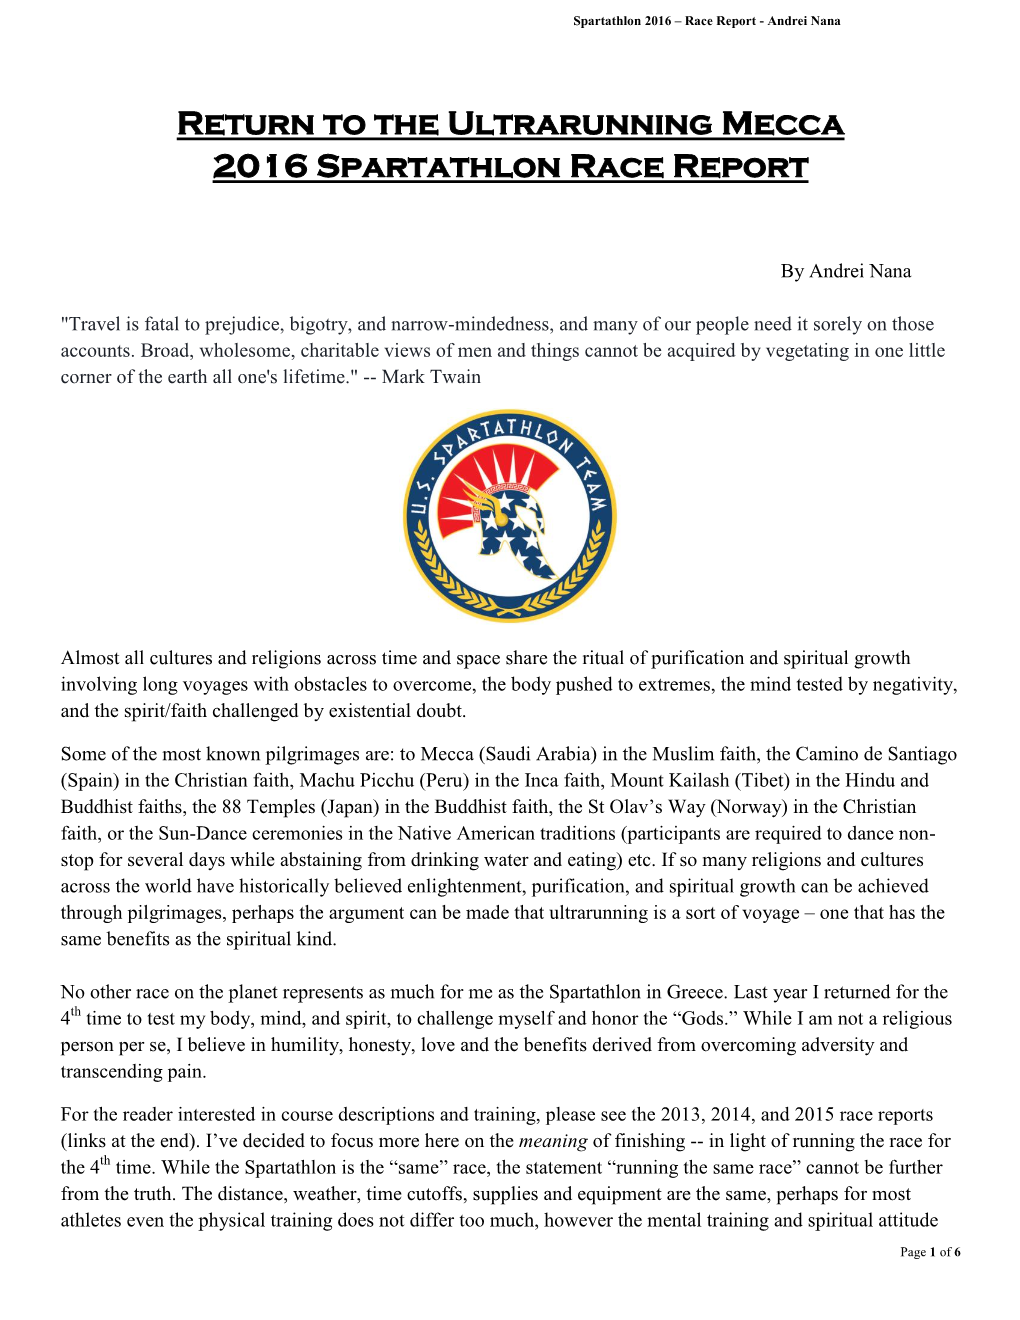 The Ultrarunning Mecca 2016 Spartathlon Race Report